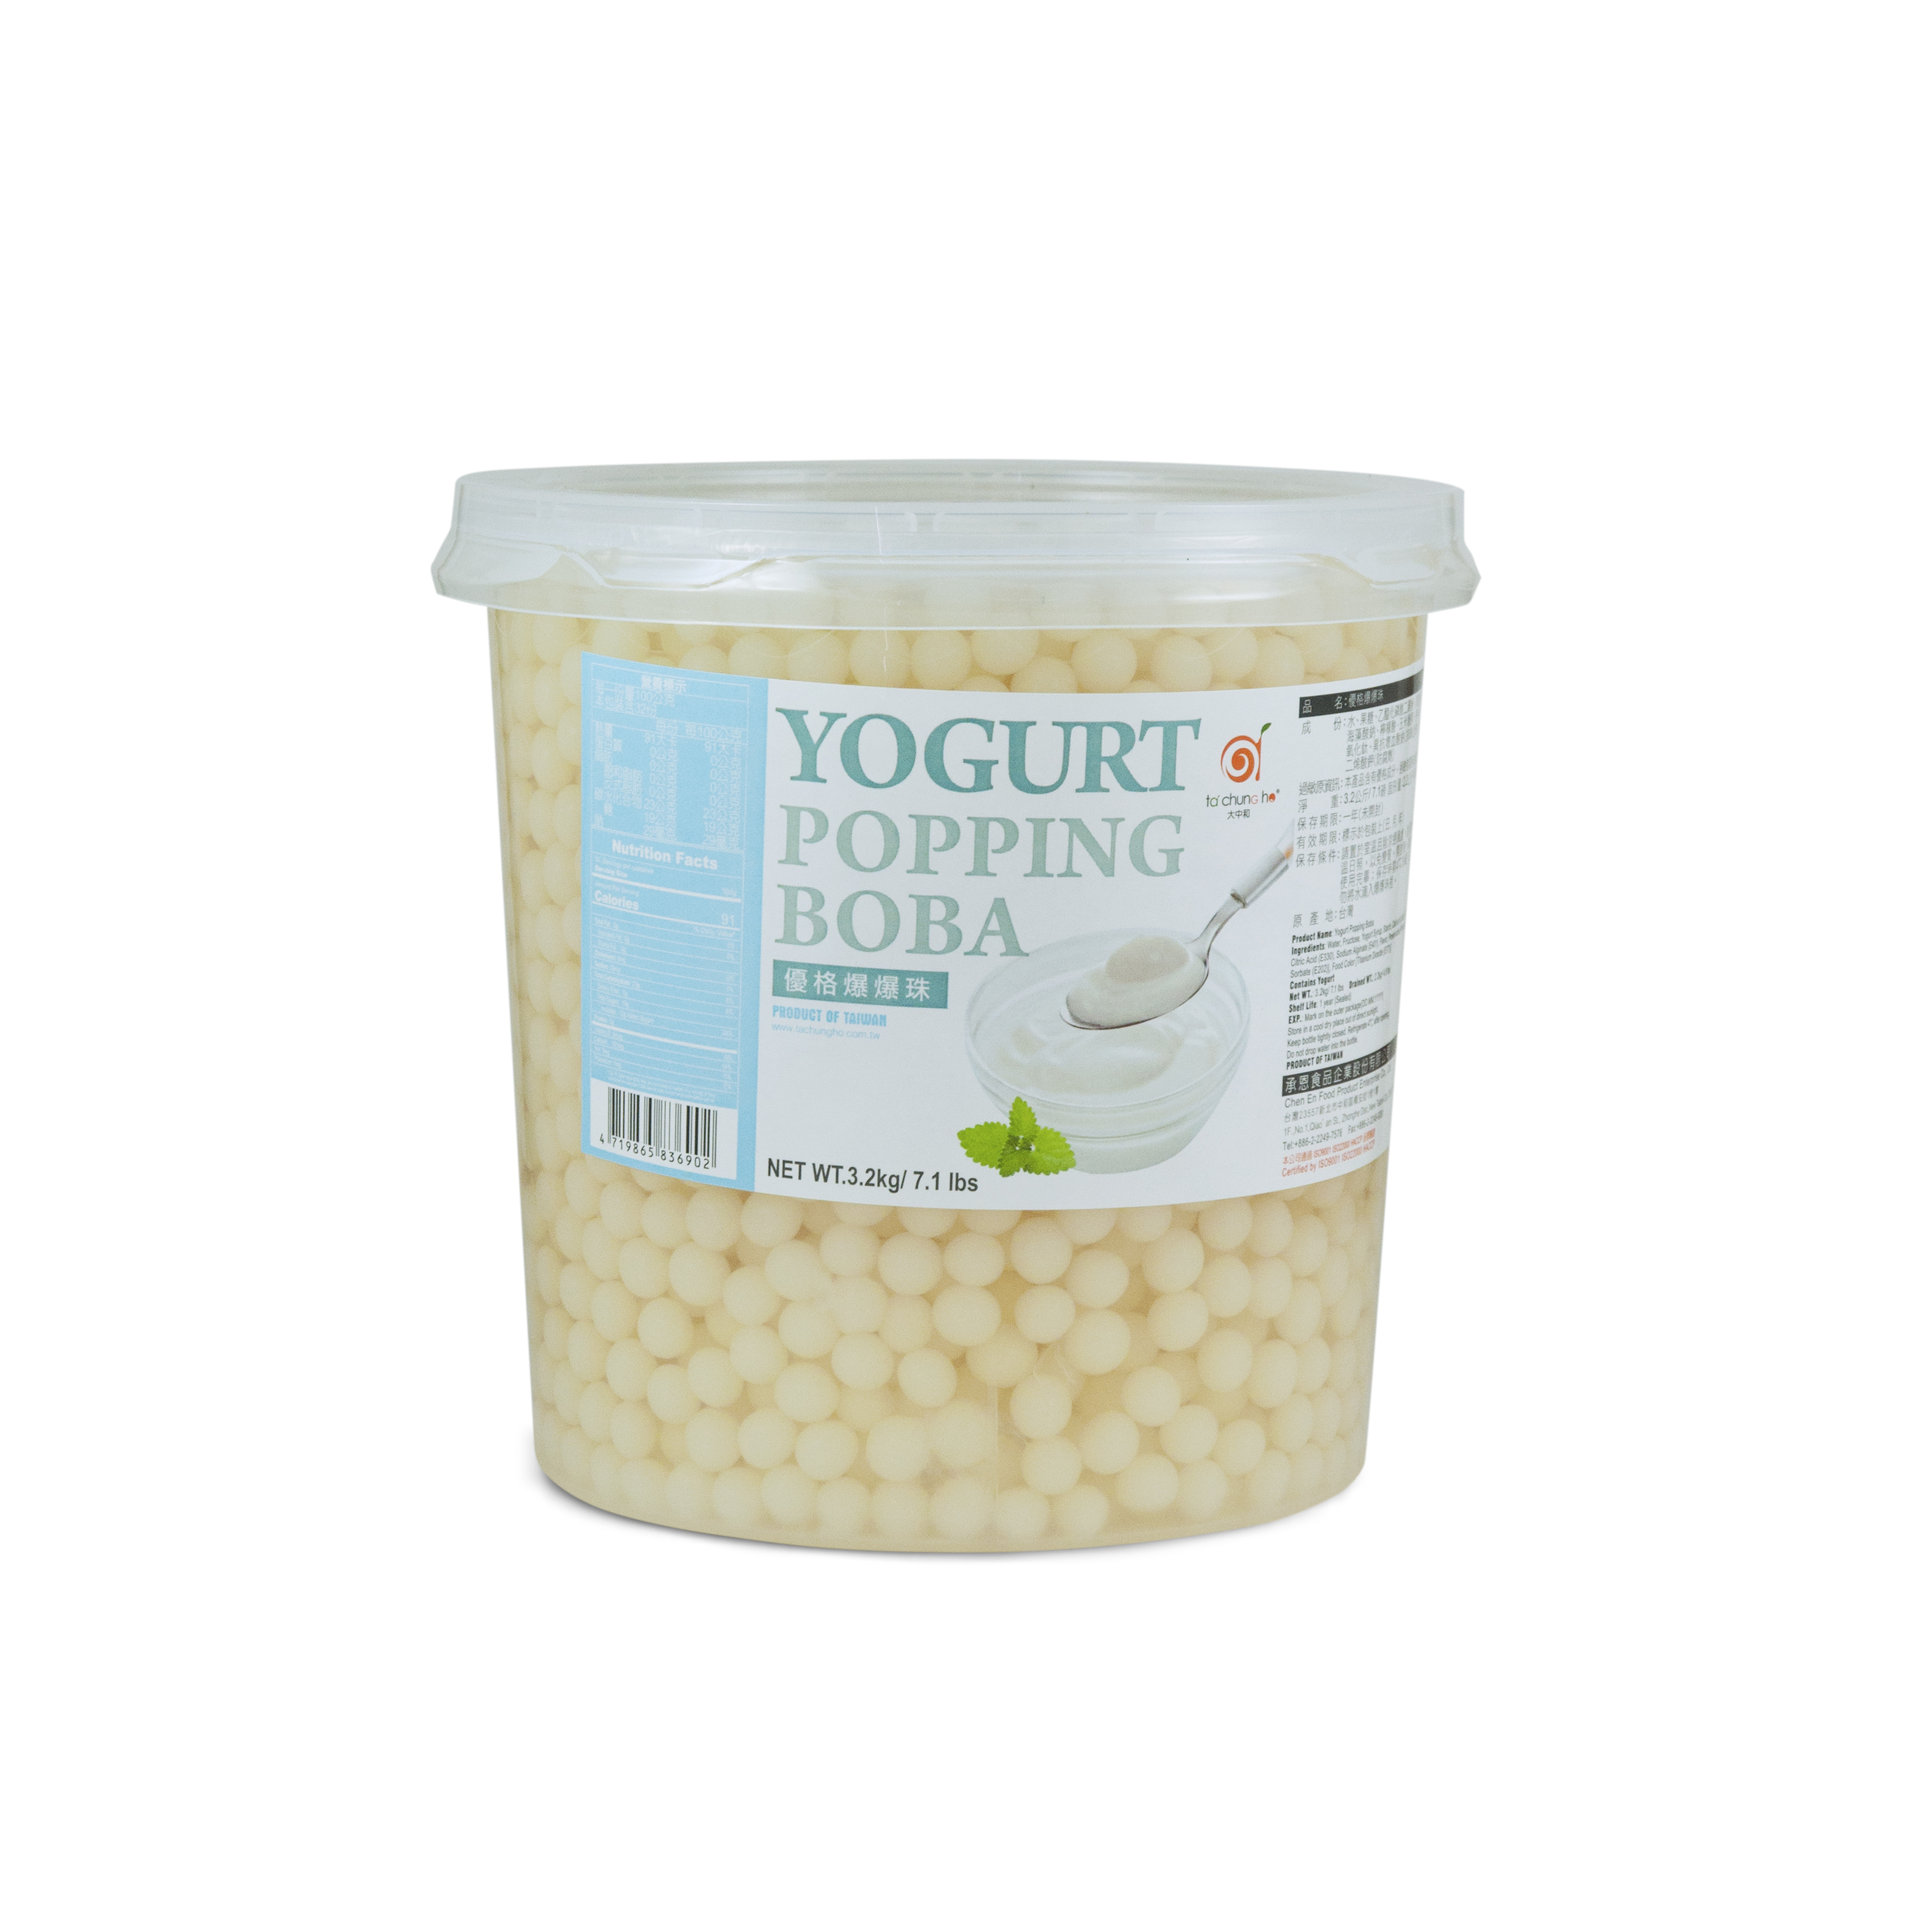 Yogurt Popping Boba Package